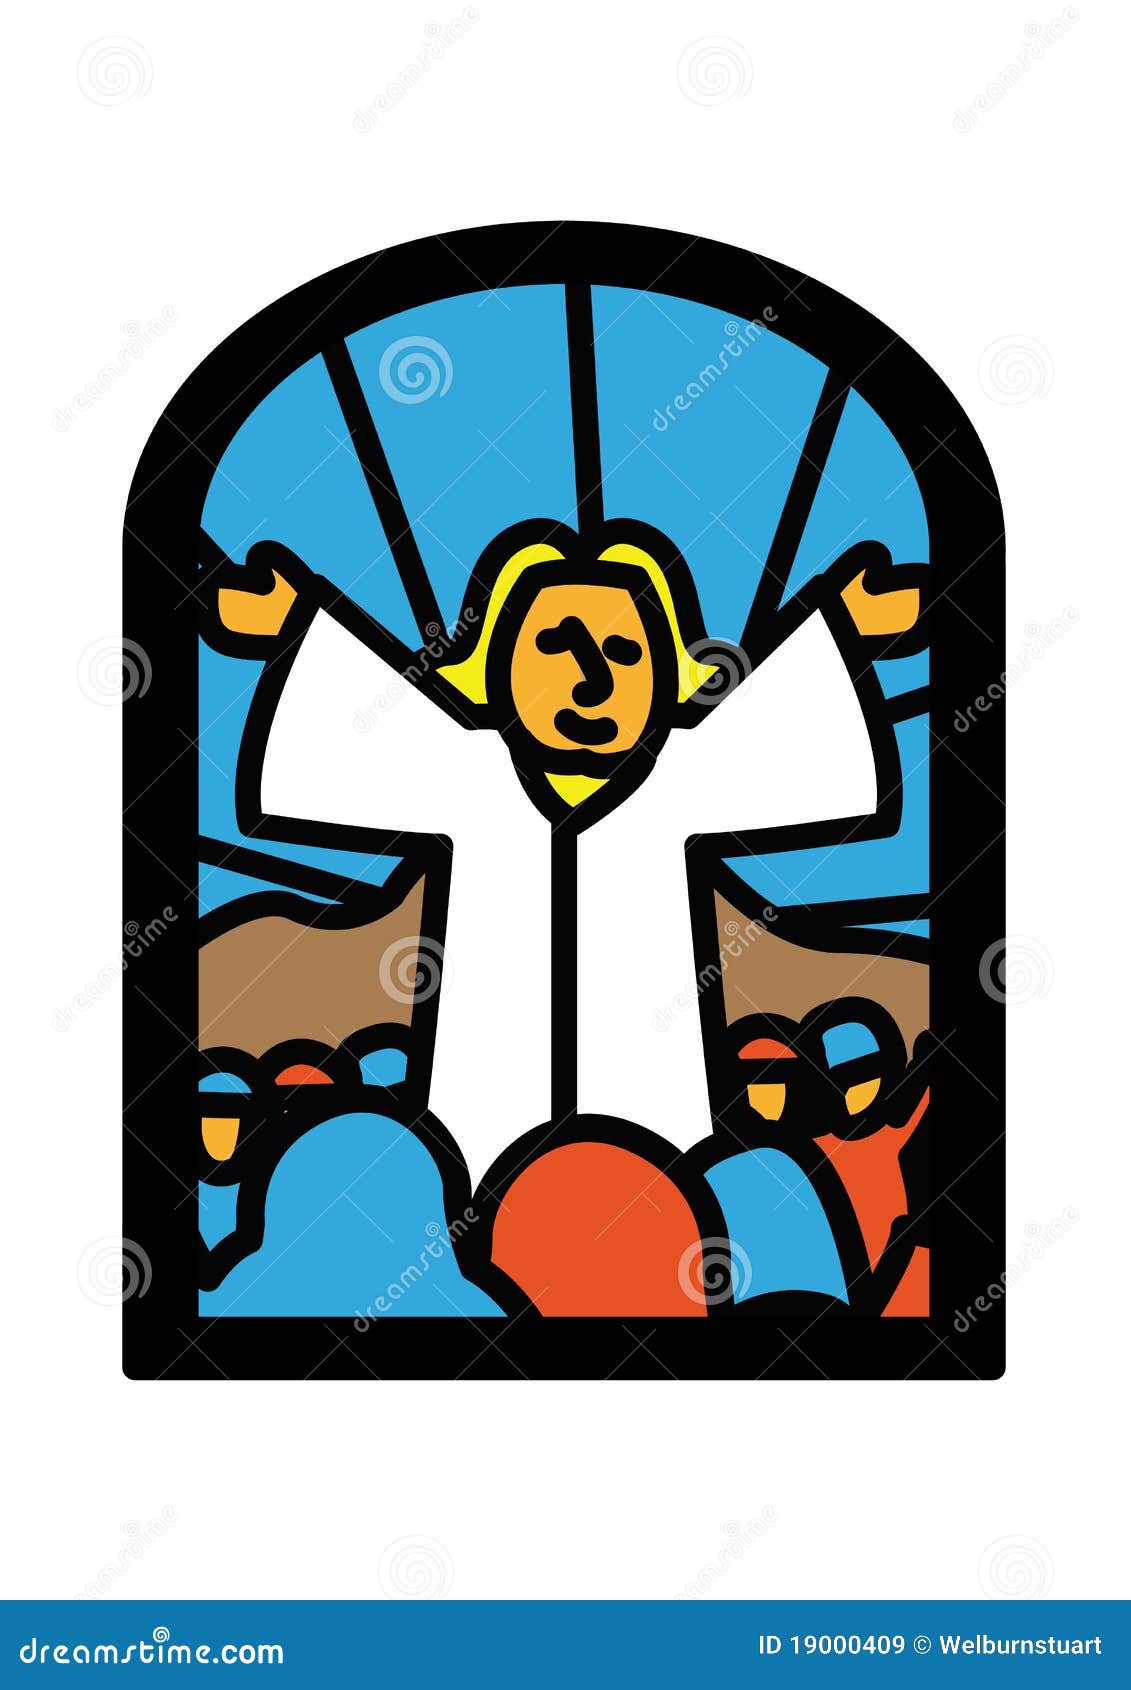 sermon window